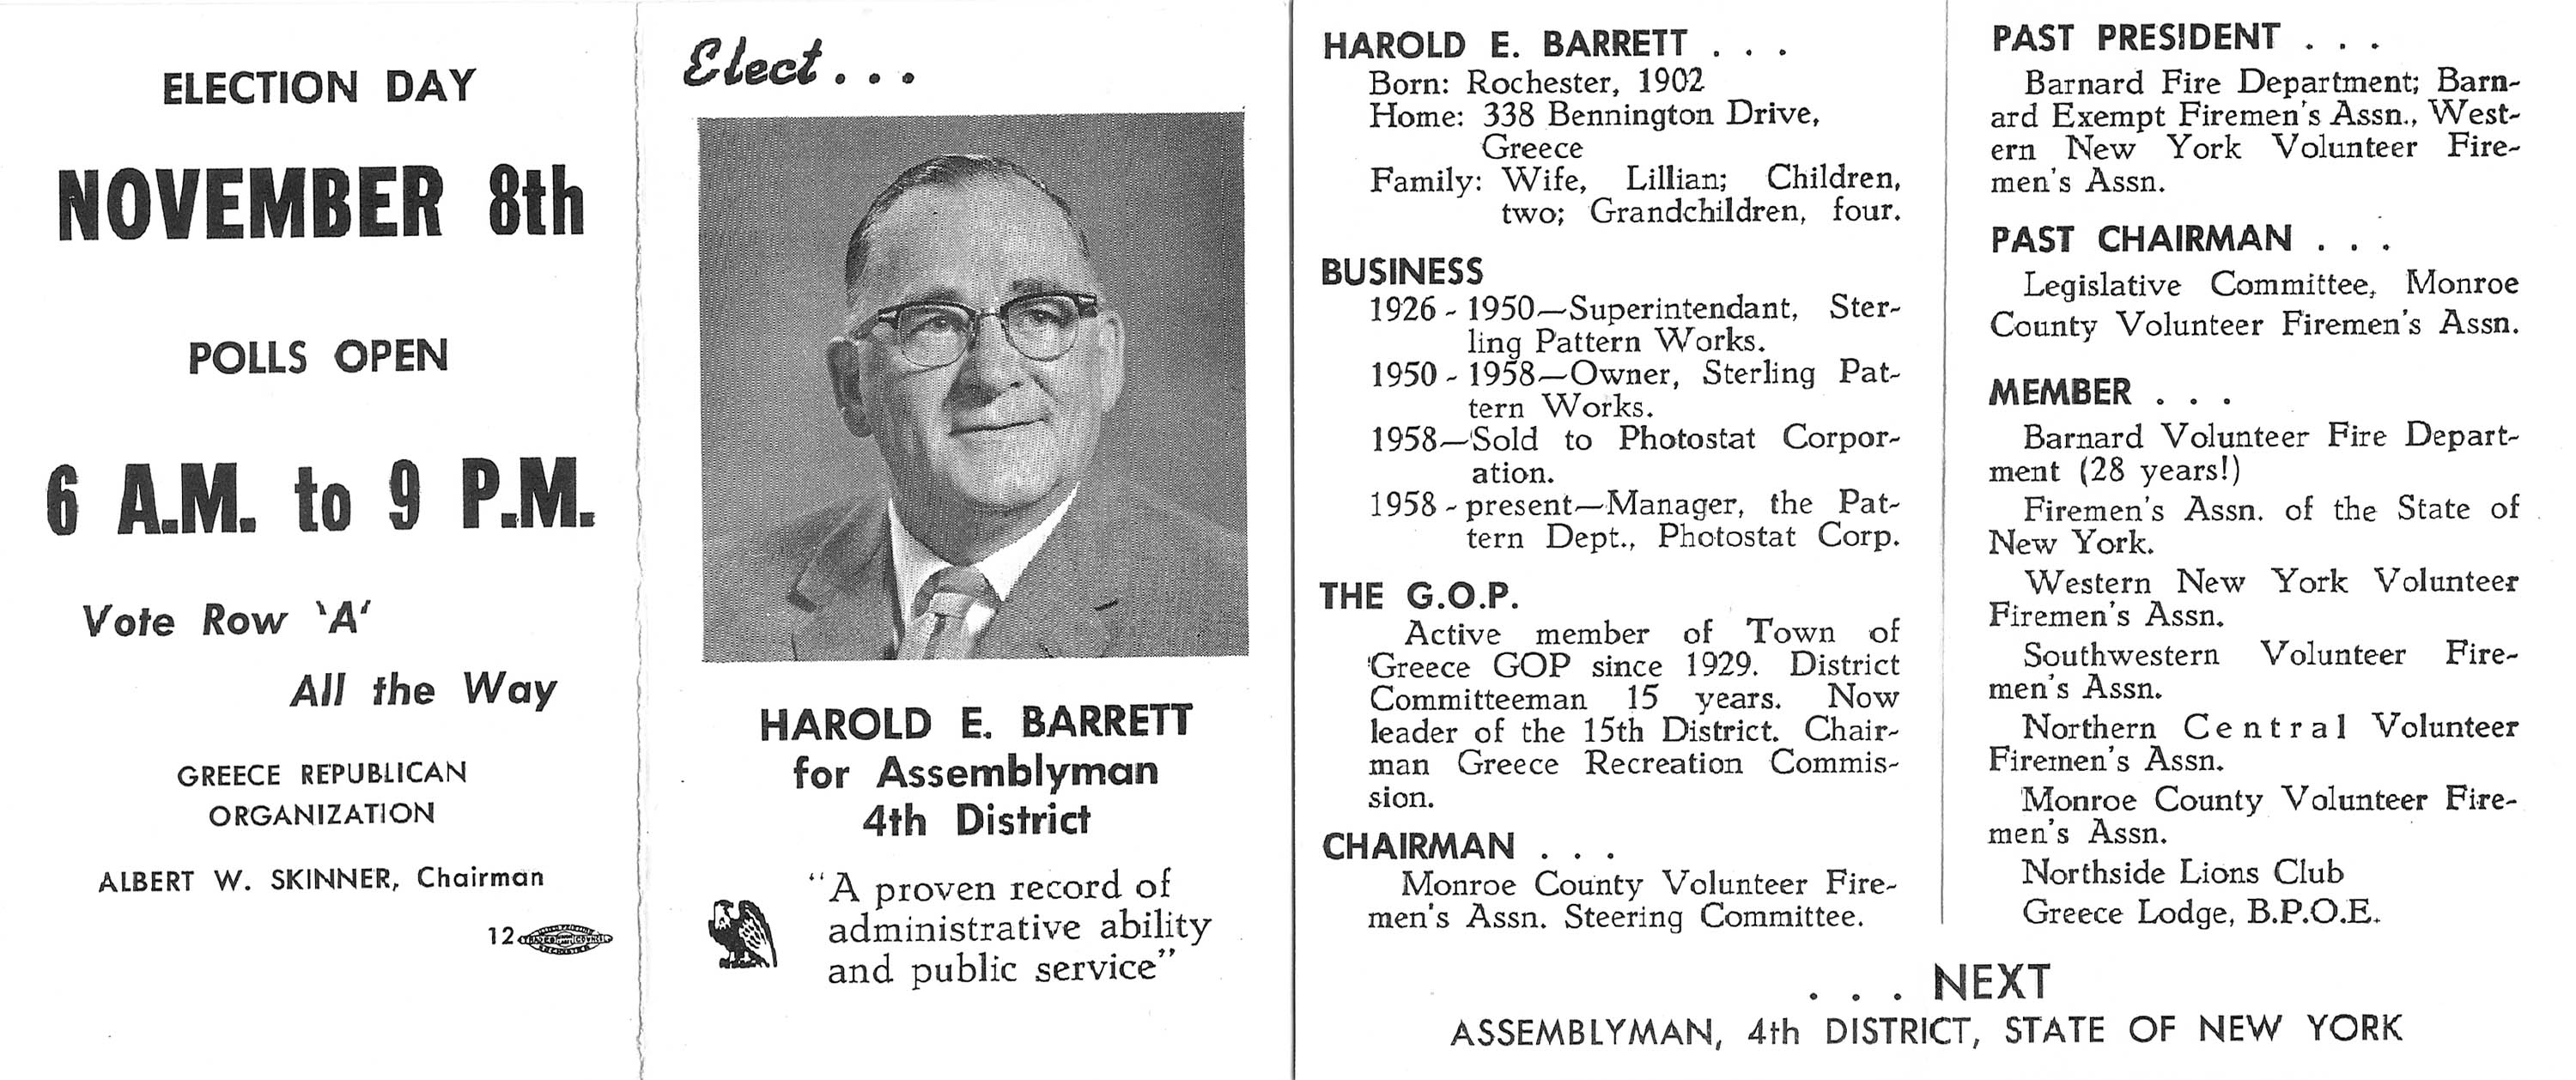 Harold E. Barrett